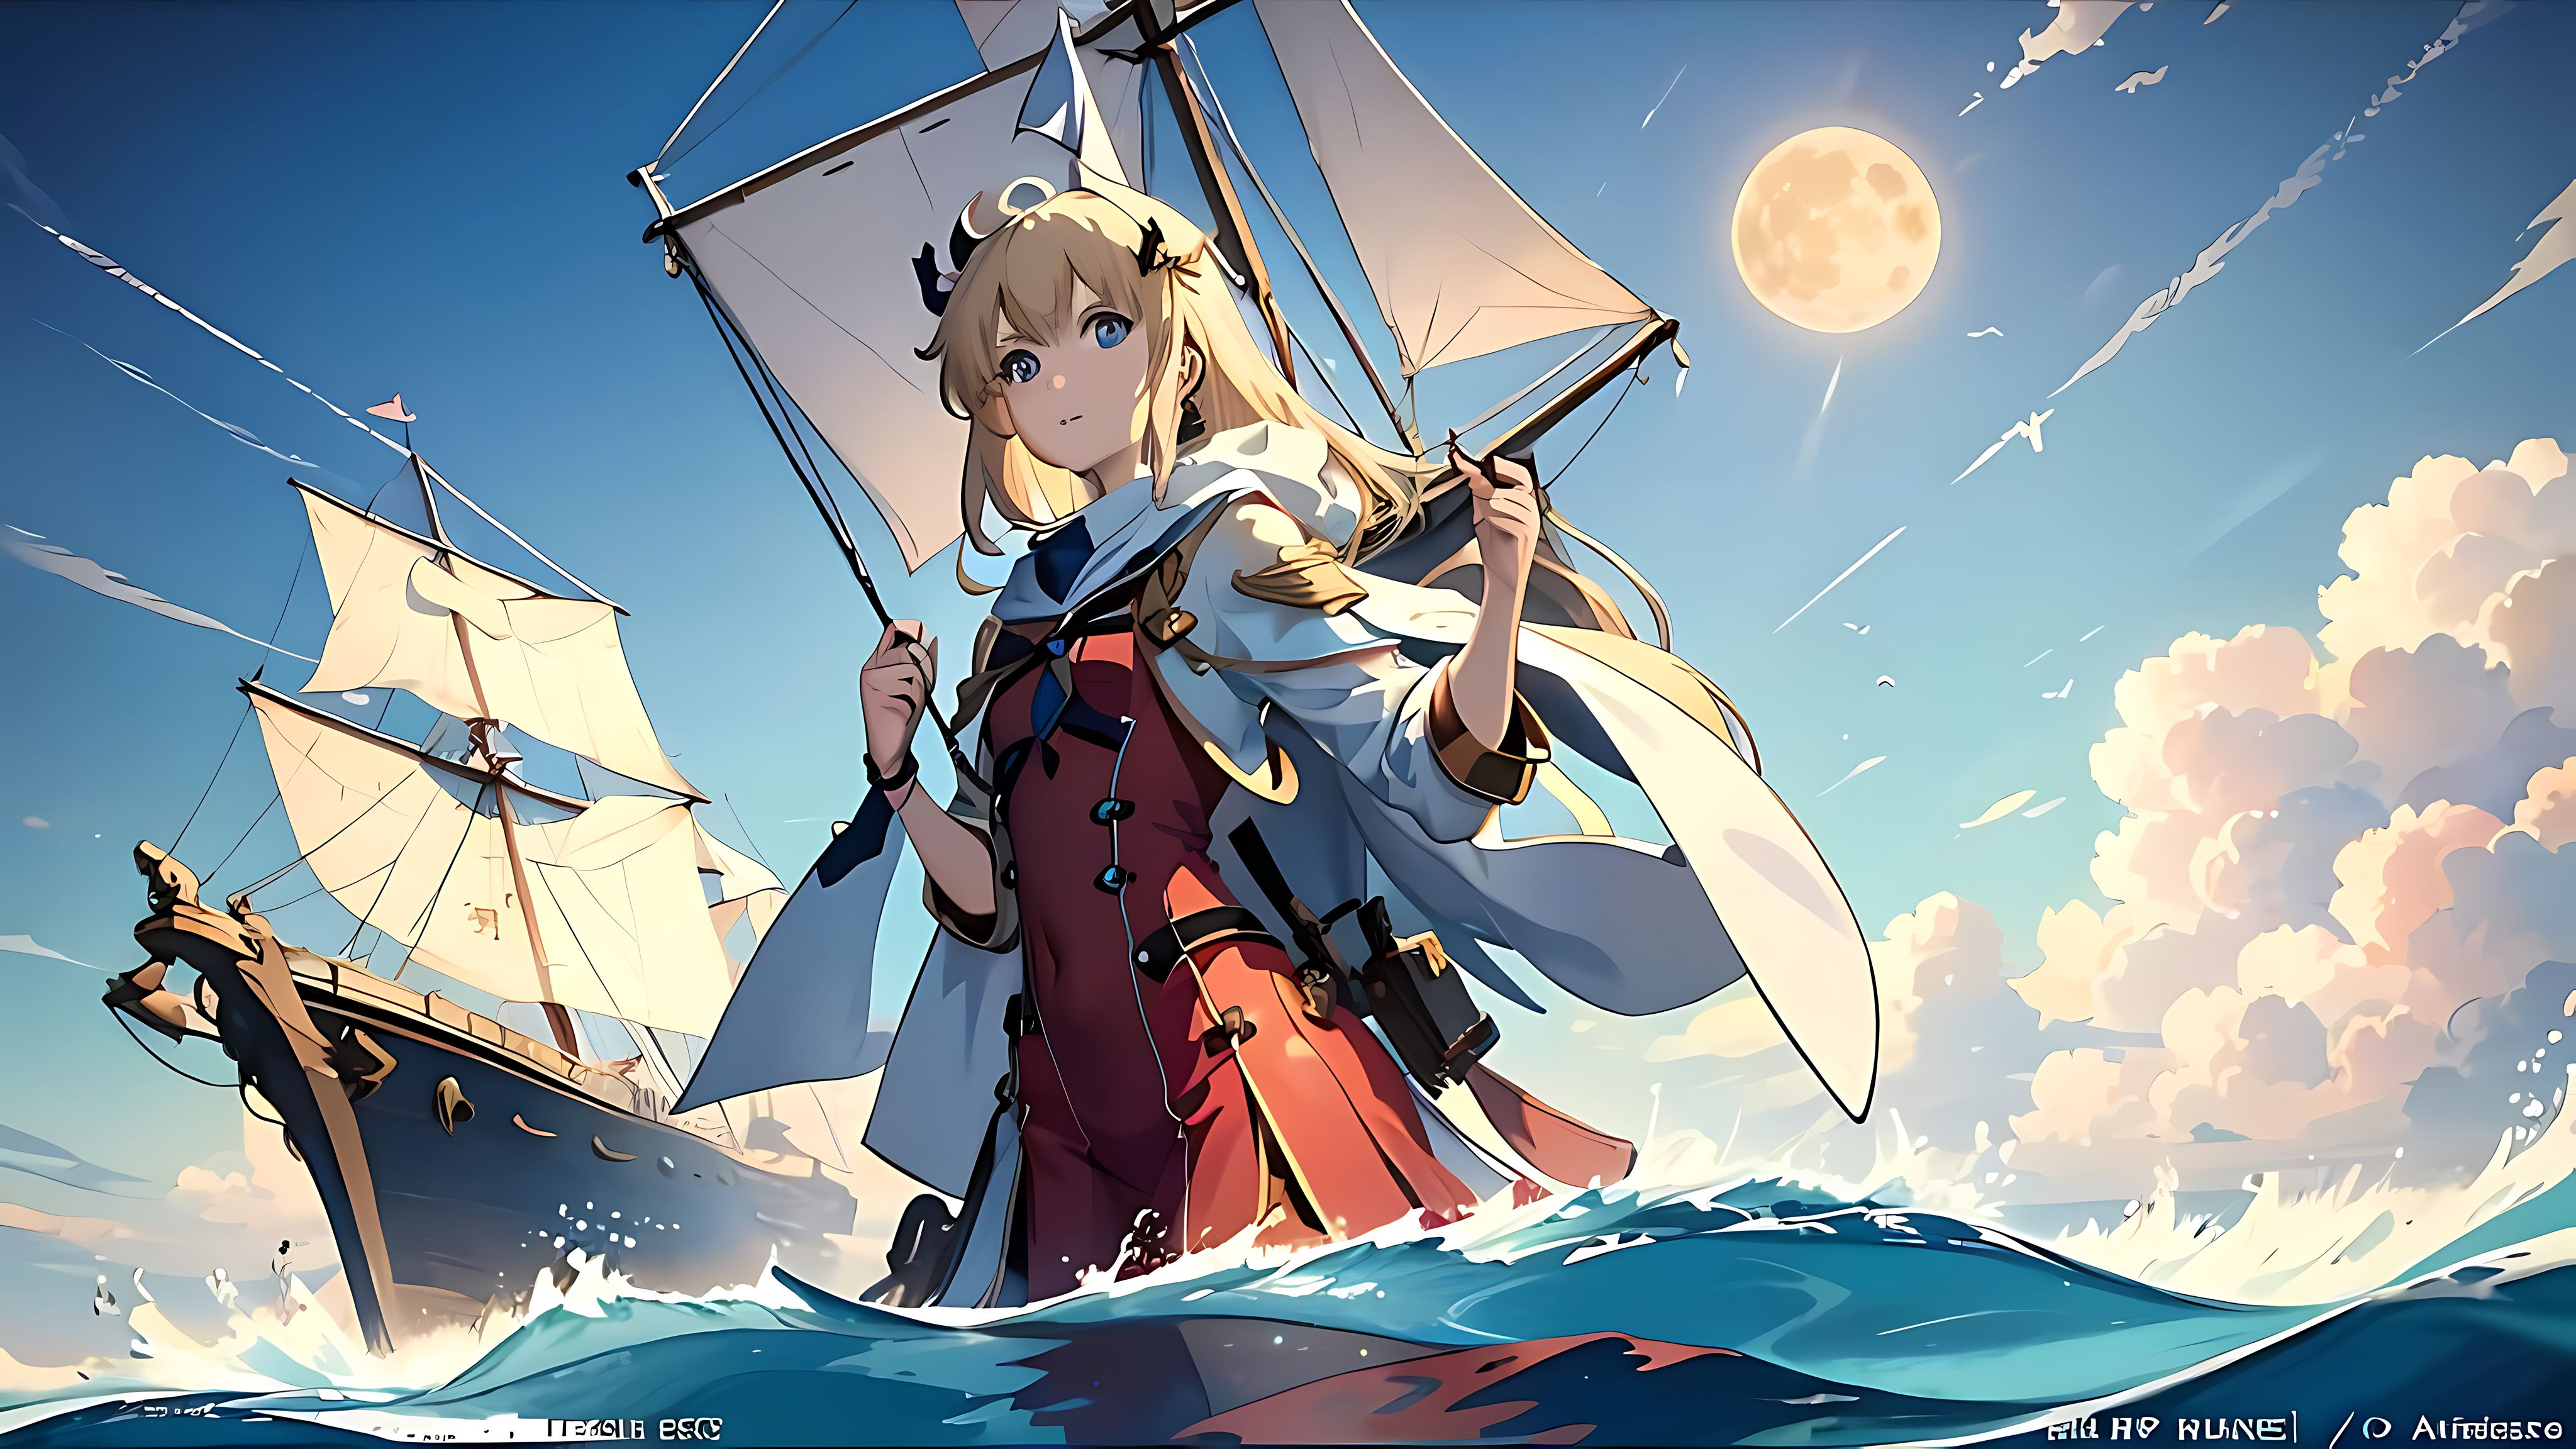 Thousand Sunny Ship from Anime Cartoon One Piece Editorial Image - Image of  girl, akihabara: 233090045